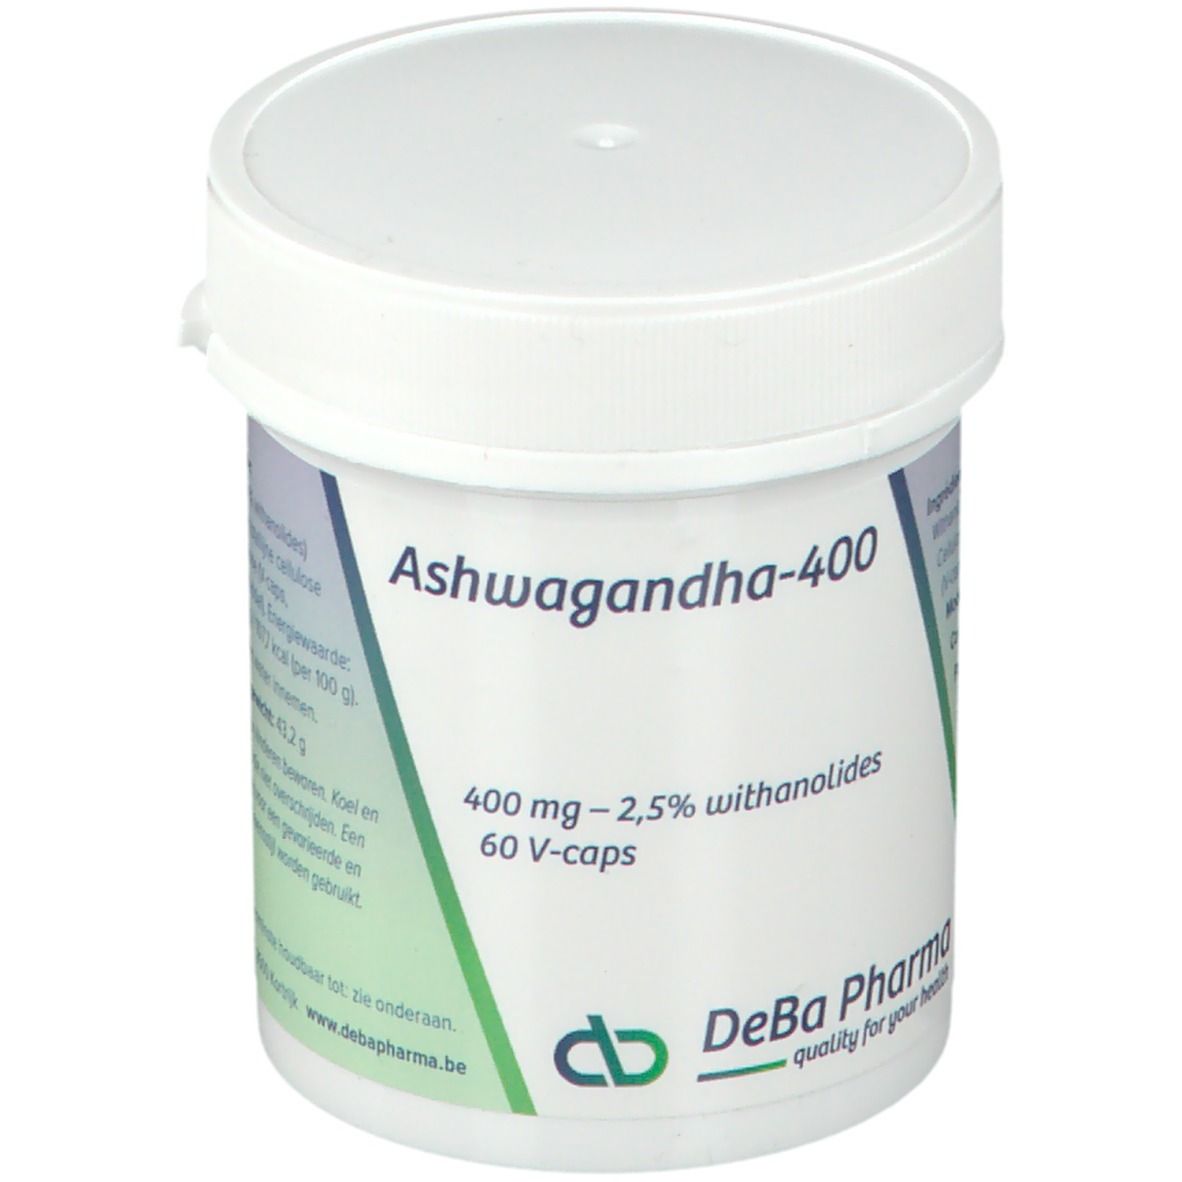 DeBa Pharma Ashawagandha-400